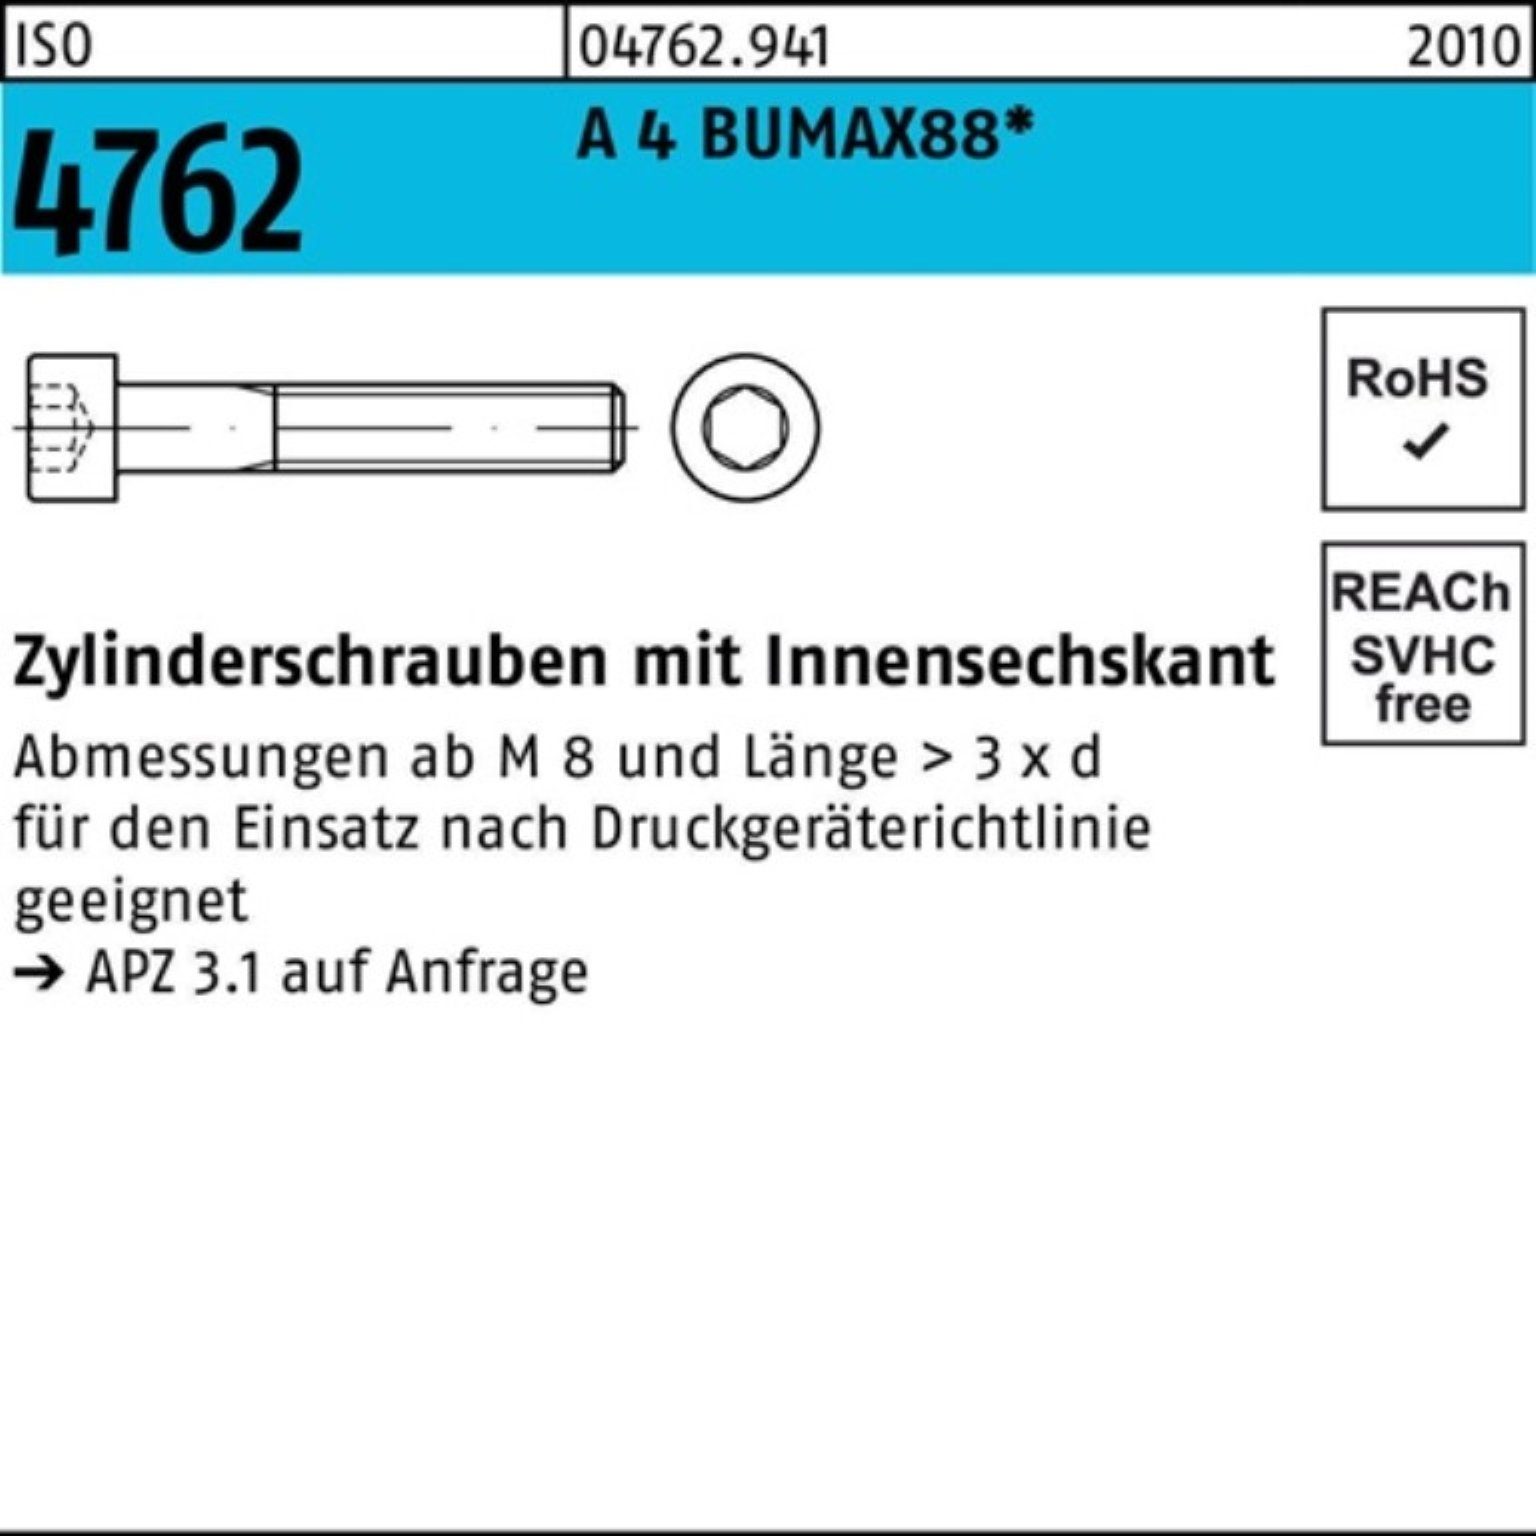 16 Zylinderschraube 4762 Bufab BUMAX88 4 ISO M5x Pack 100 Innen-6kt 100er Zylinderschraube A